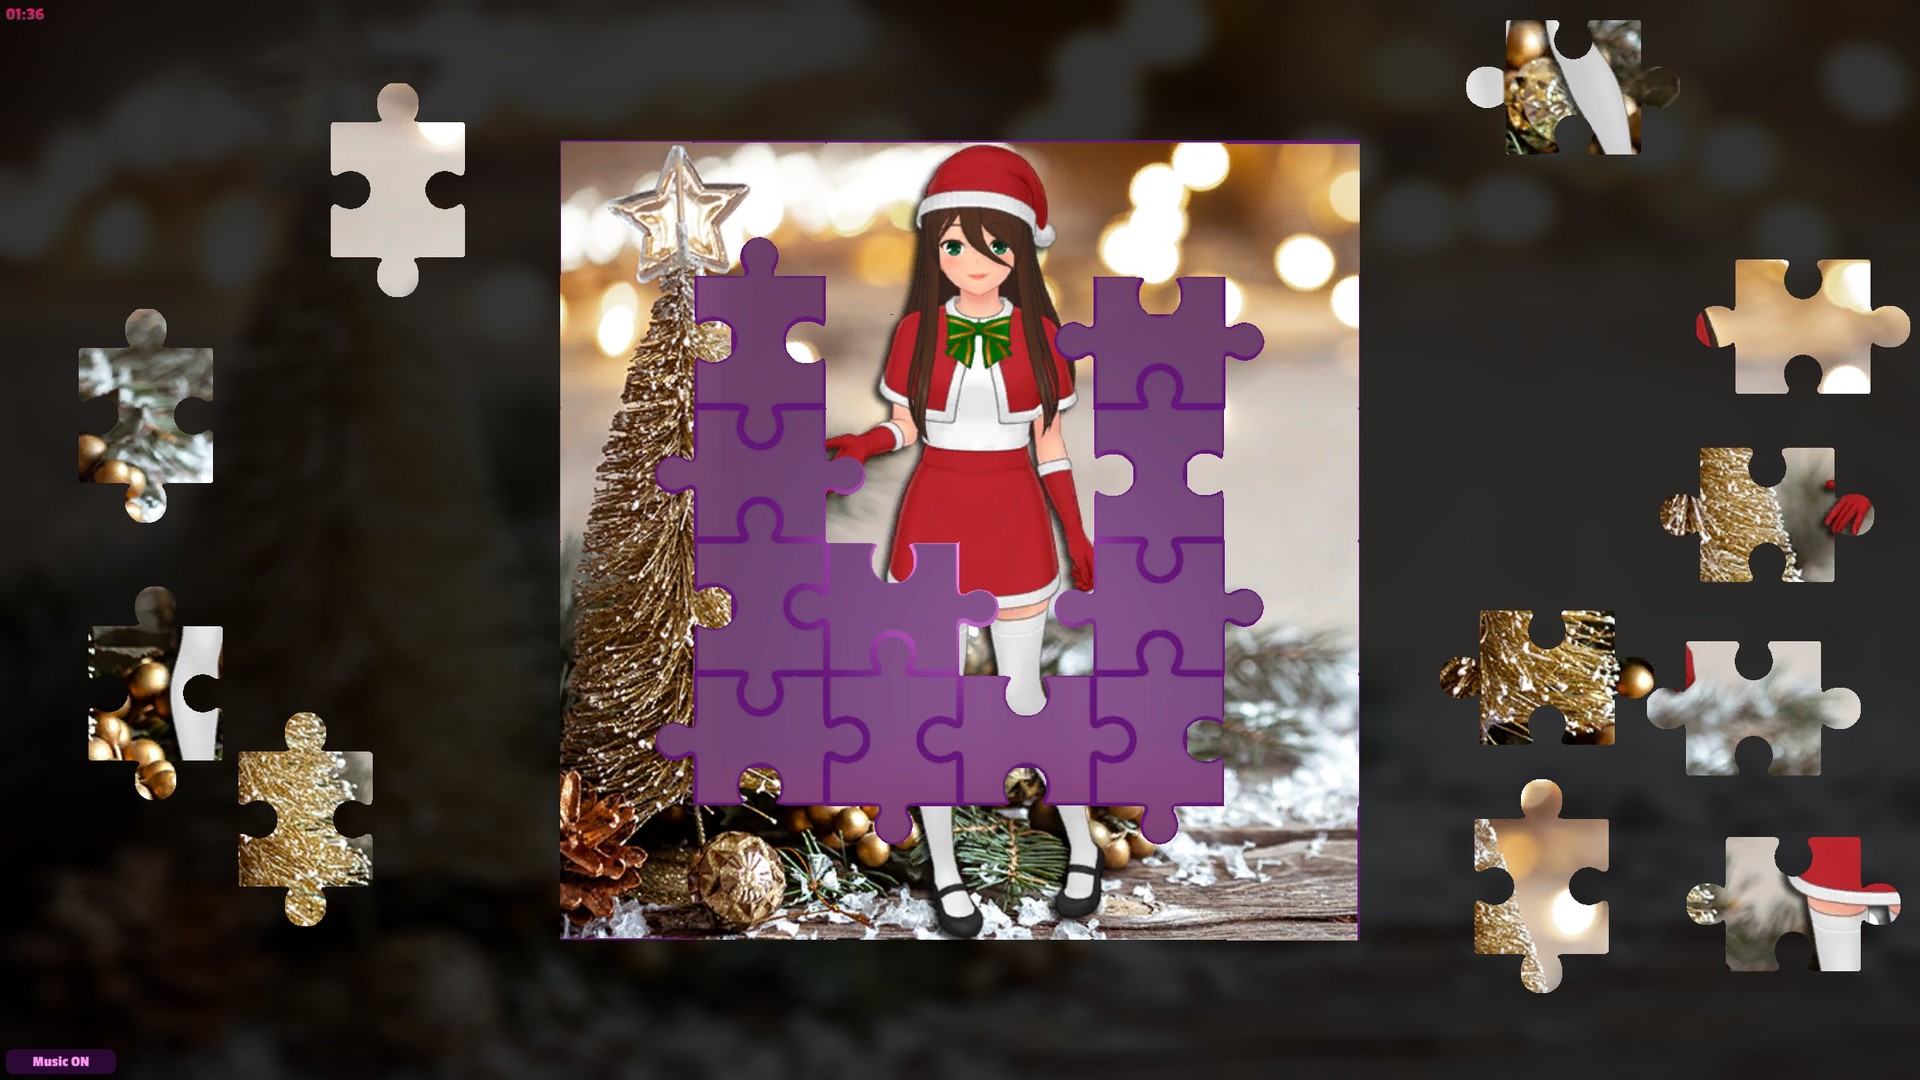 [$ 0.18] Anime Jigsaw Girls - Christmas Steam CD Key